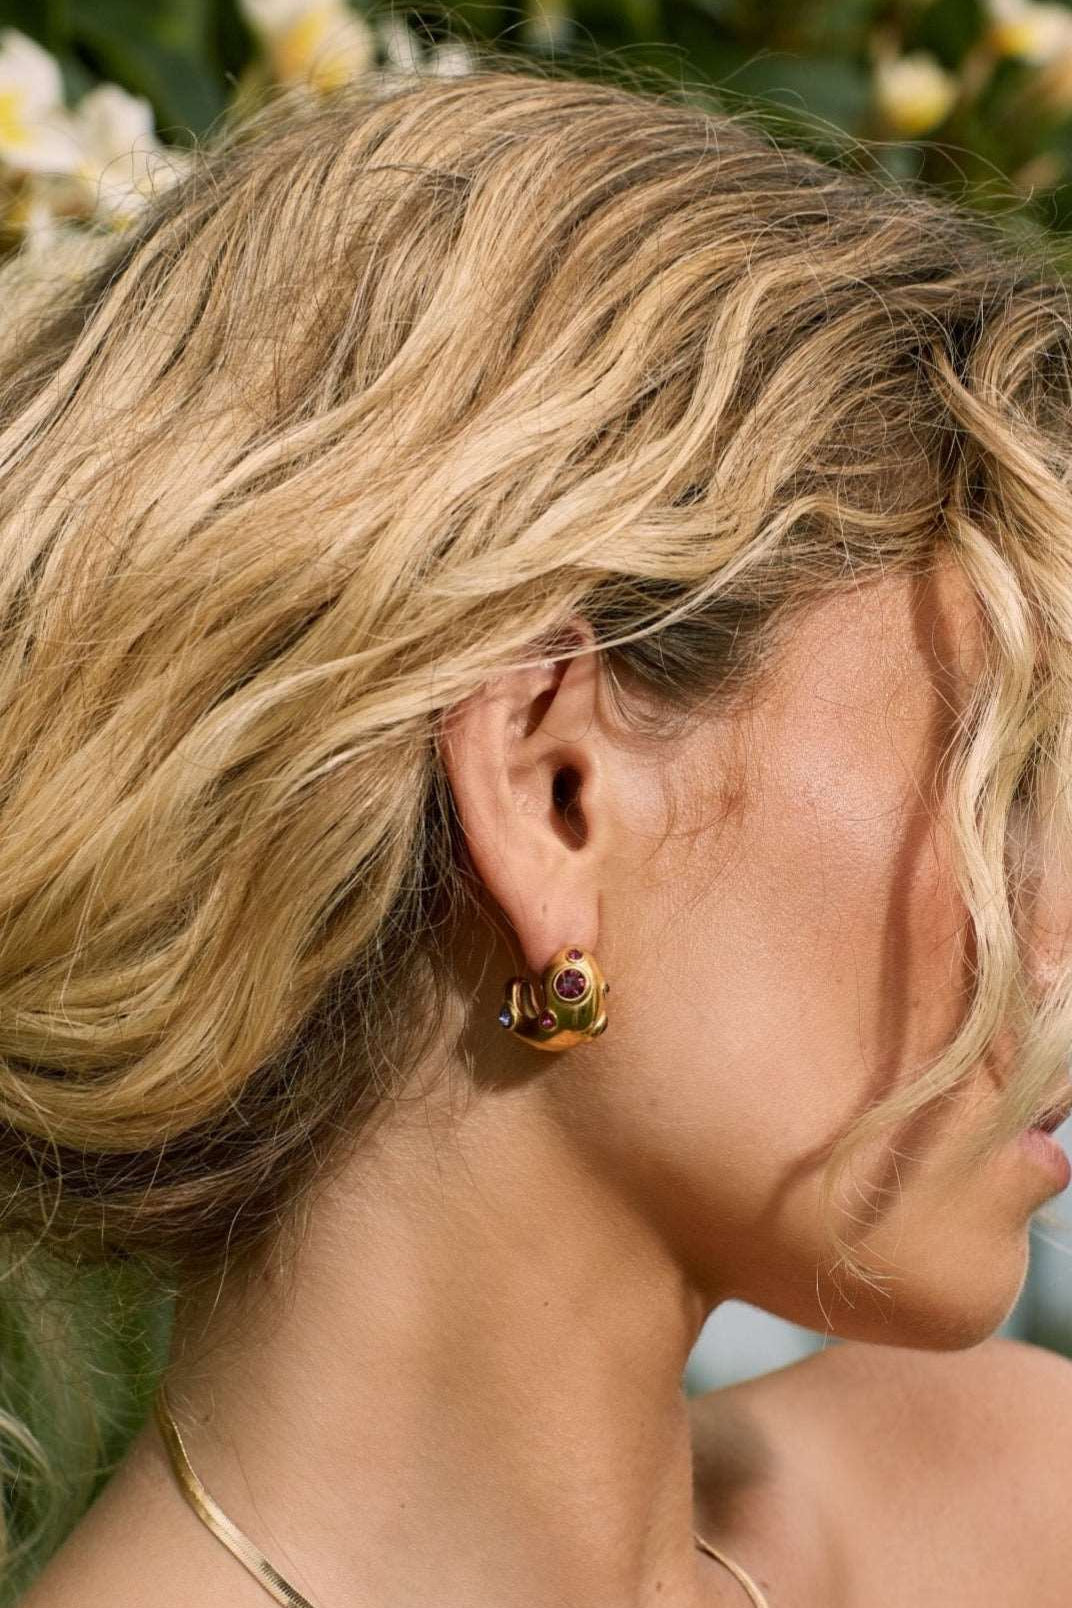 Pink and purple coloured gemstone earrings on blonde girl